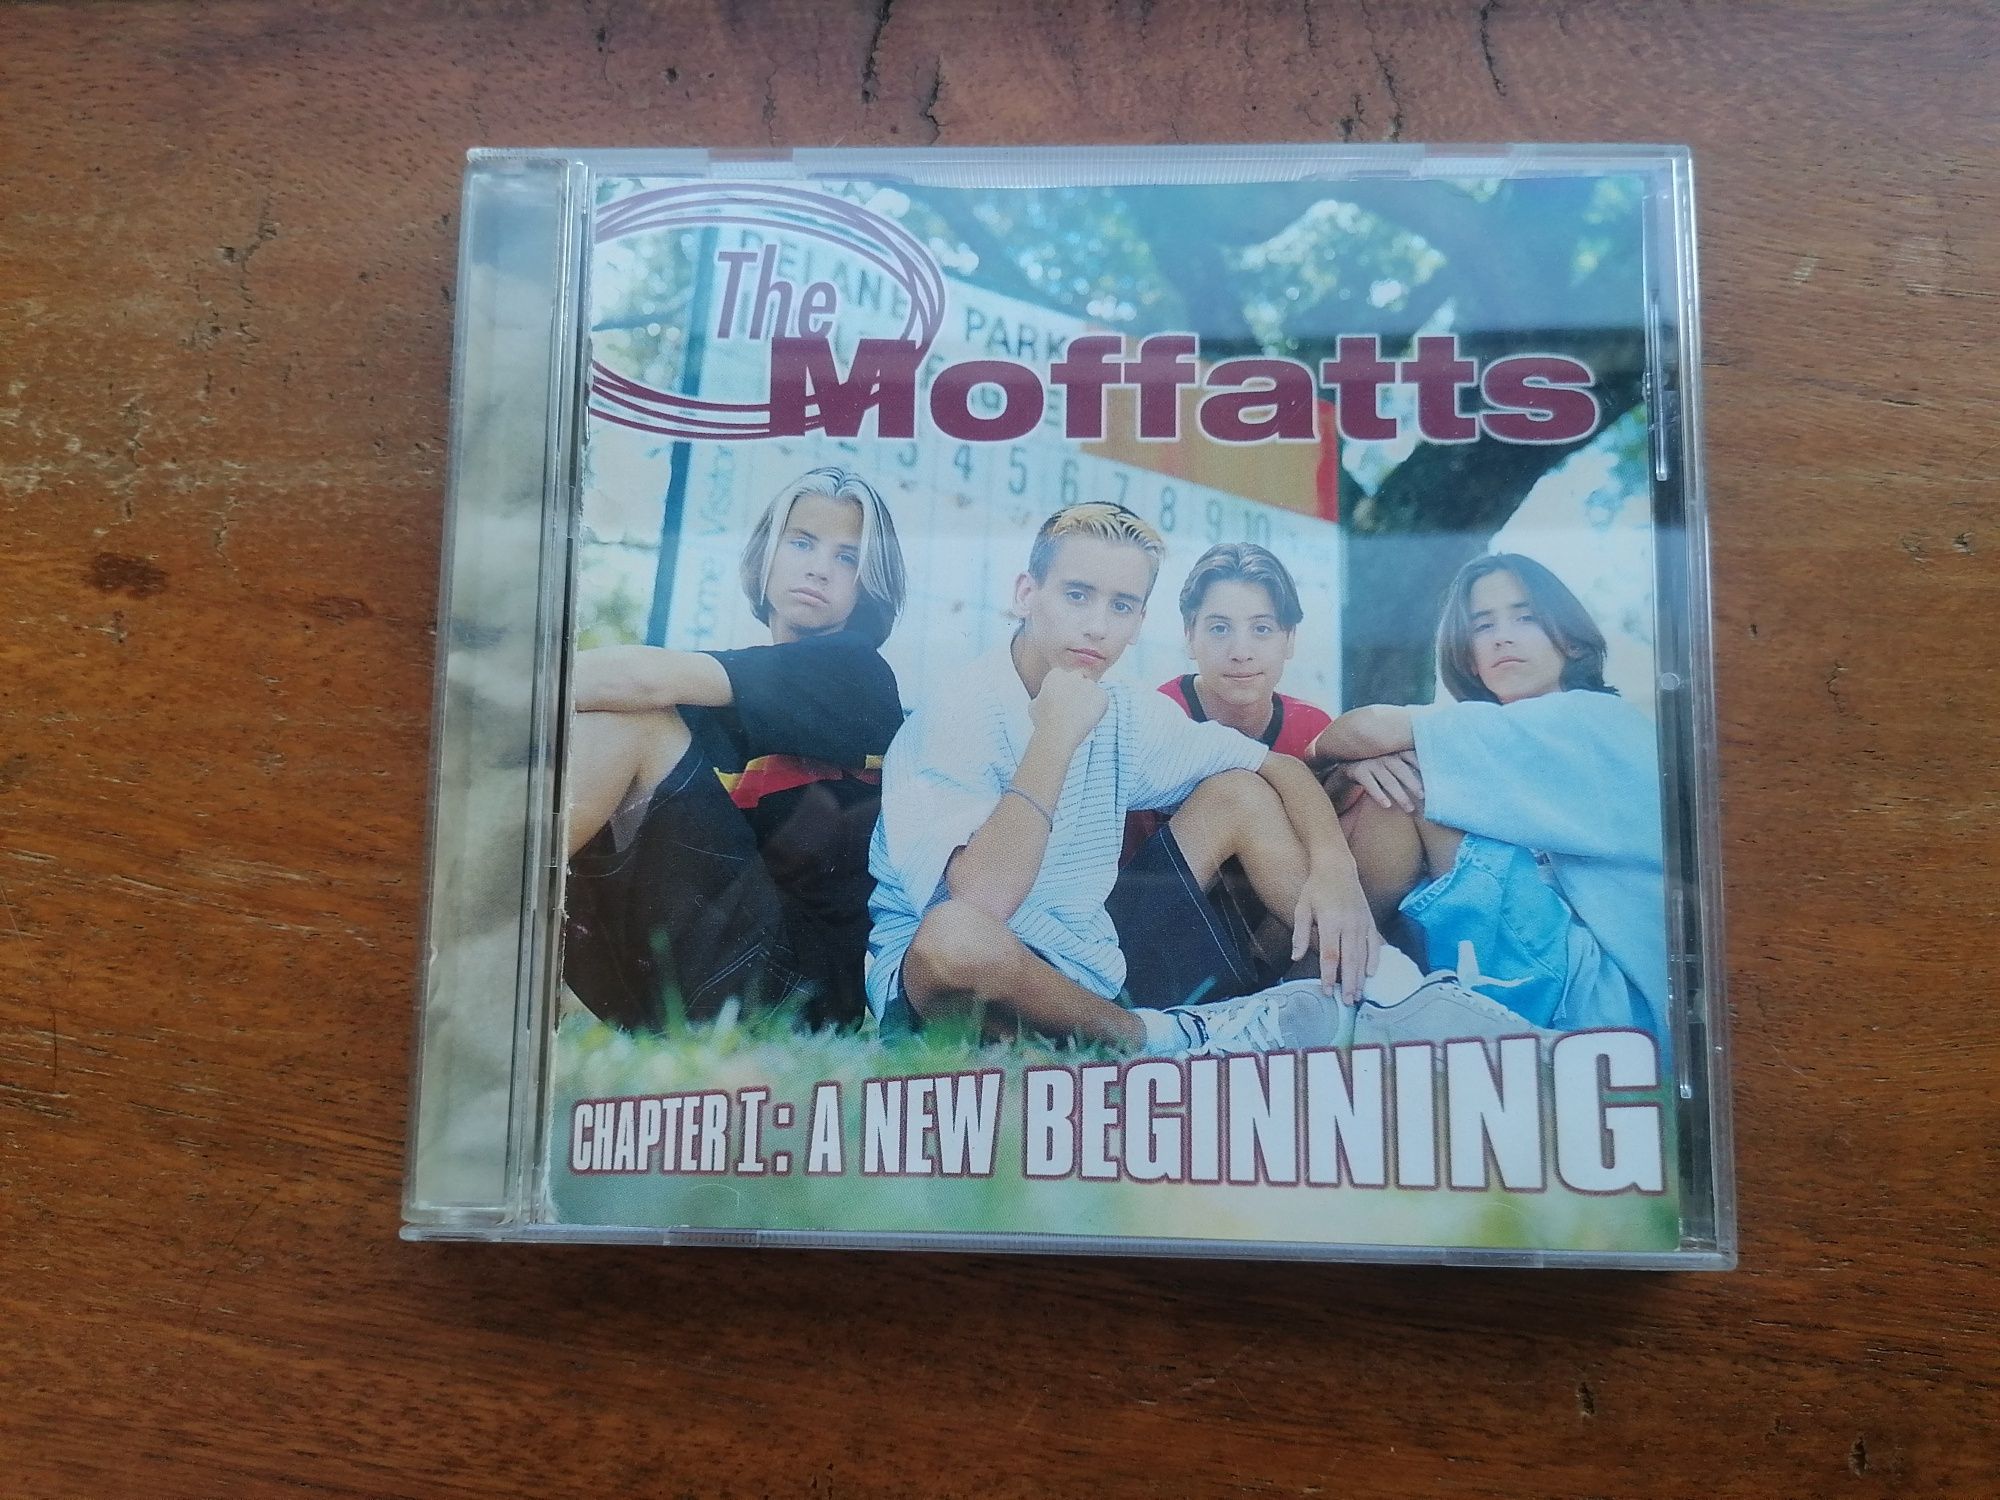 CD The Moffatts "A new beginning"